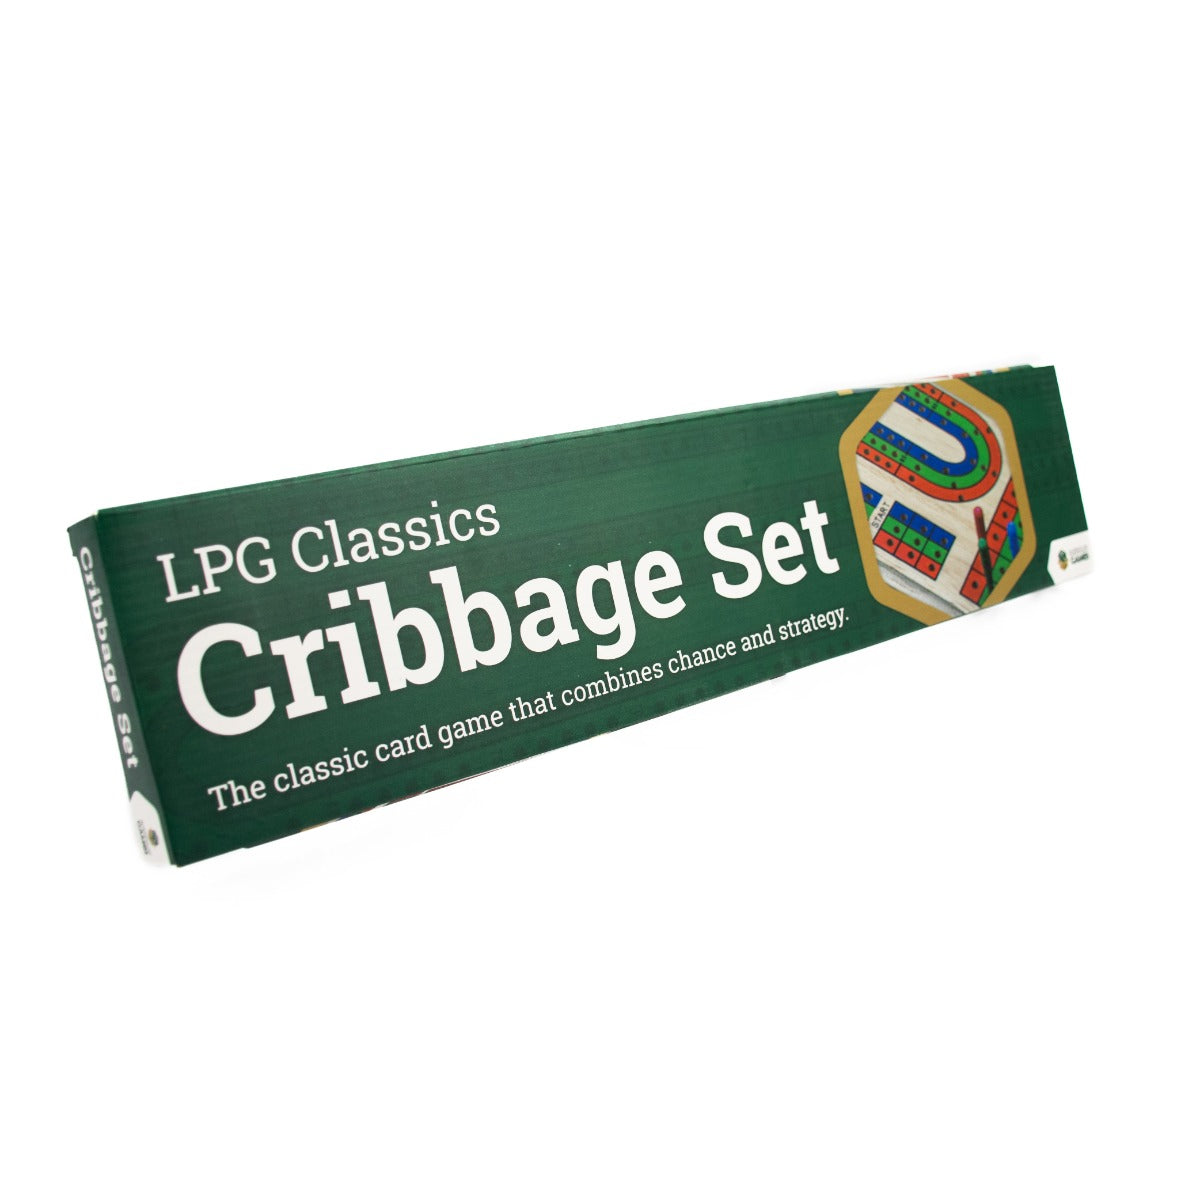 LPG Cribbage